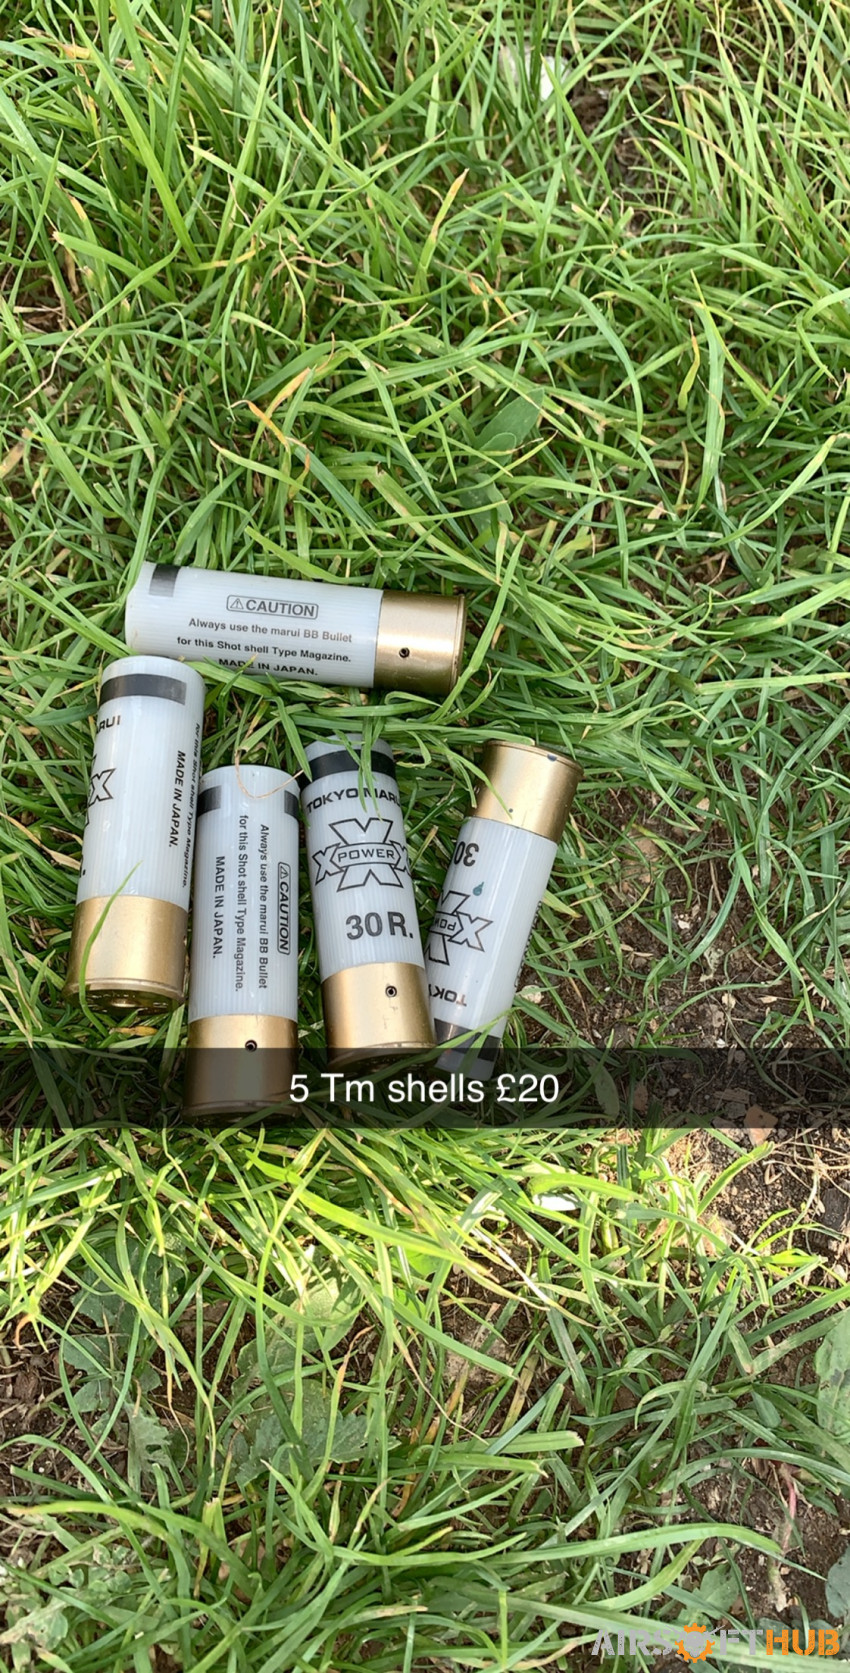 Tm shells - Used airsoft equipment